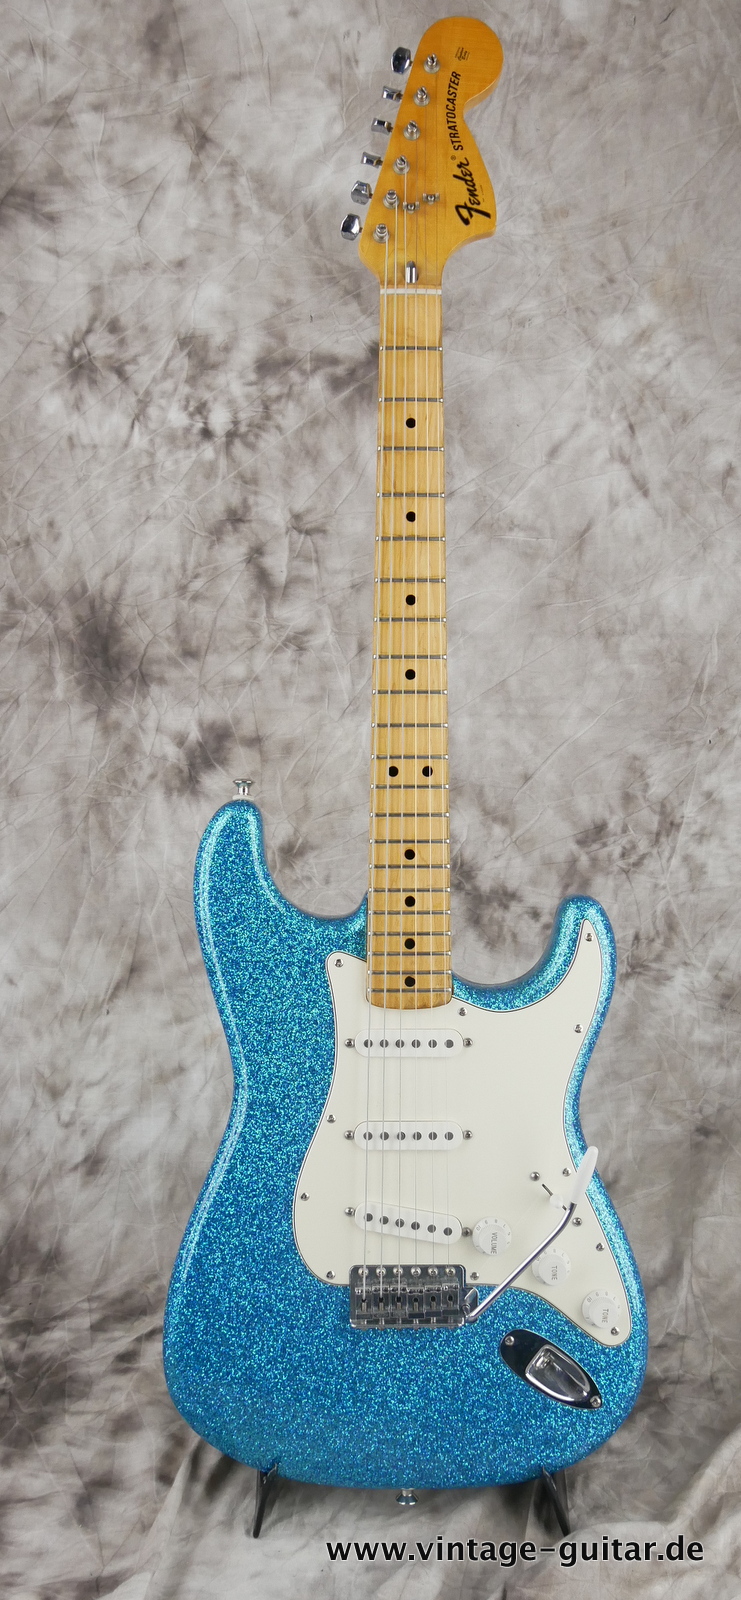 img/vintage/5223/Fender-Stratocaster-1974c-blue-sparkle-001.JPG